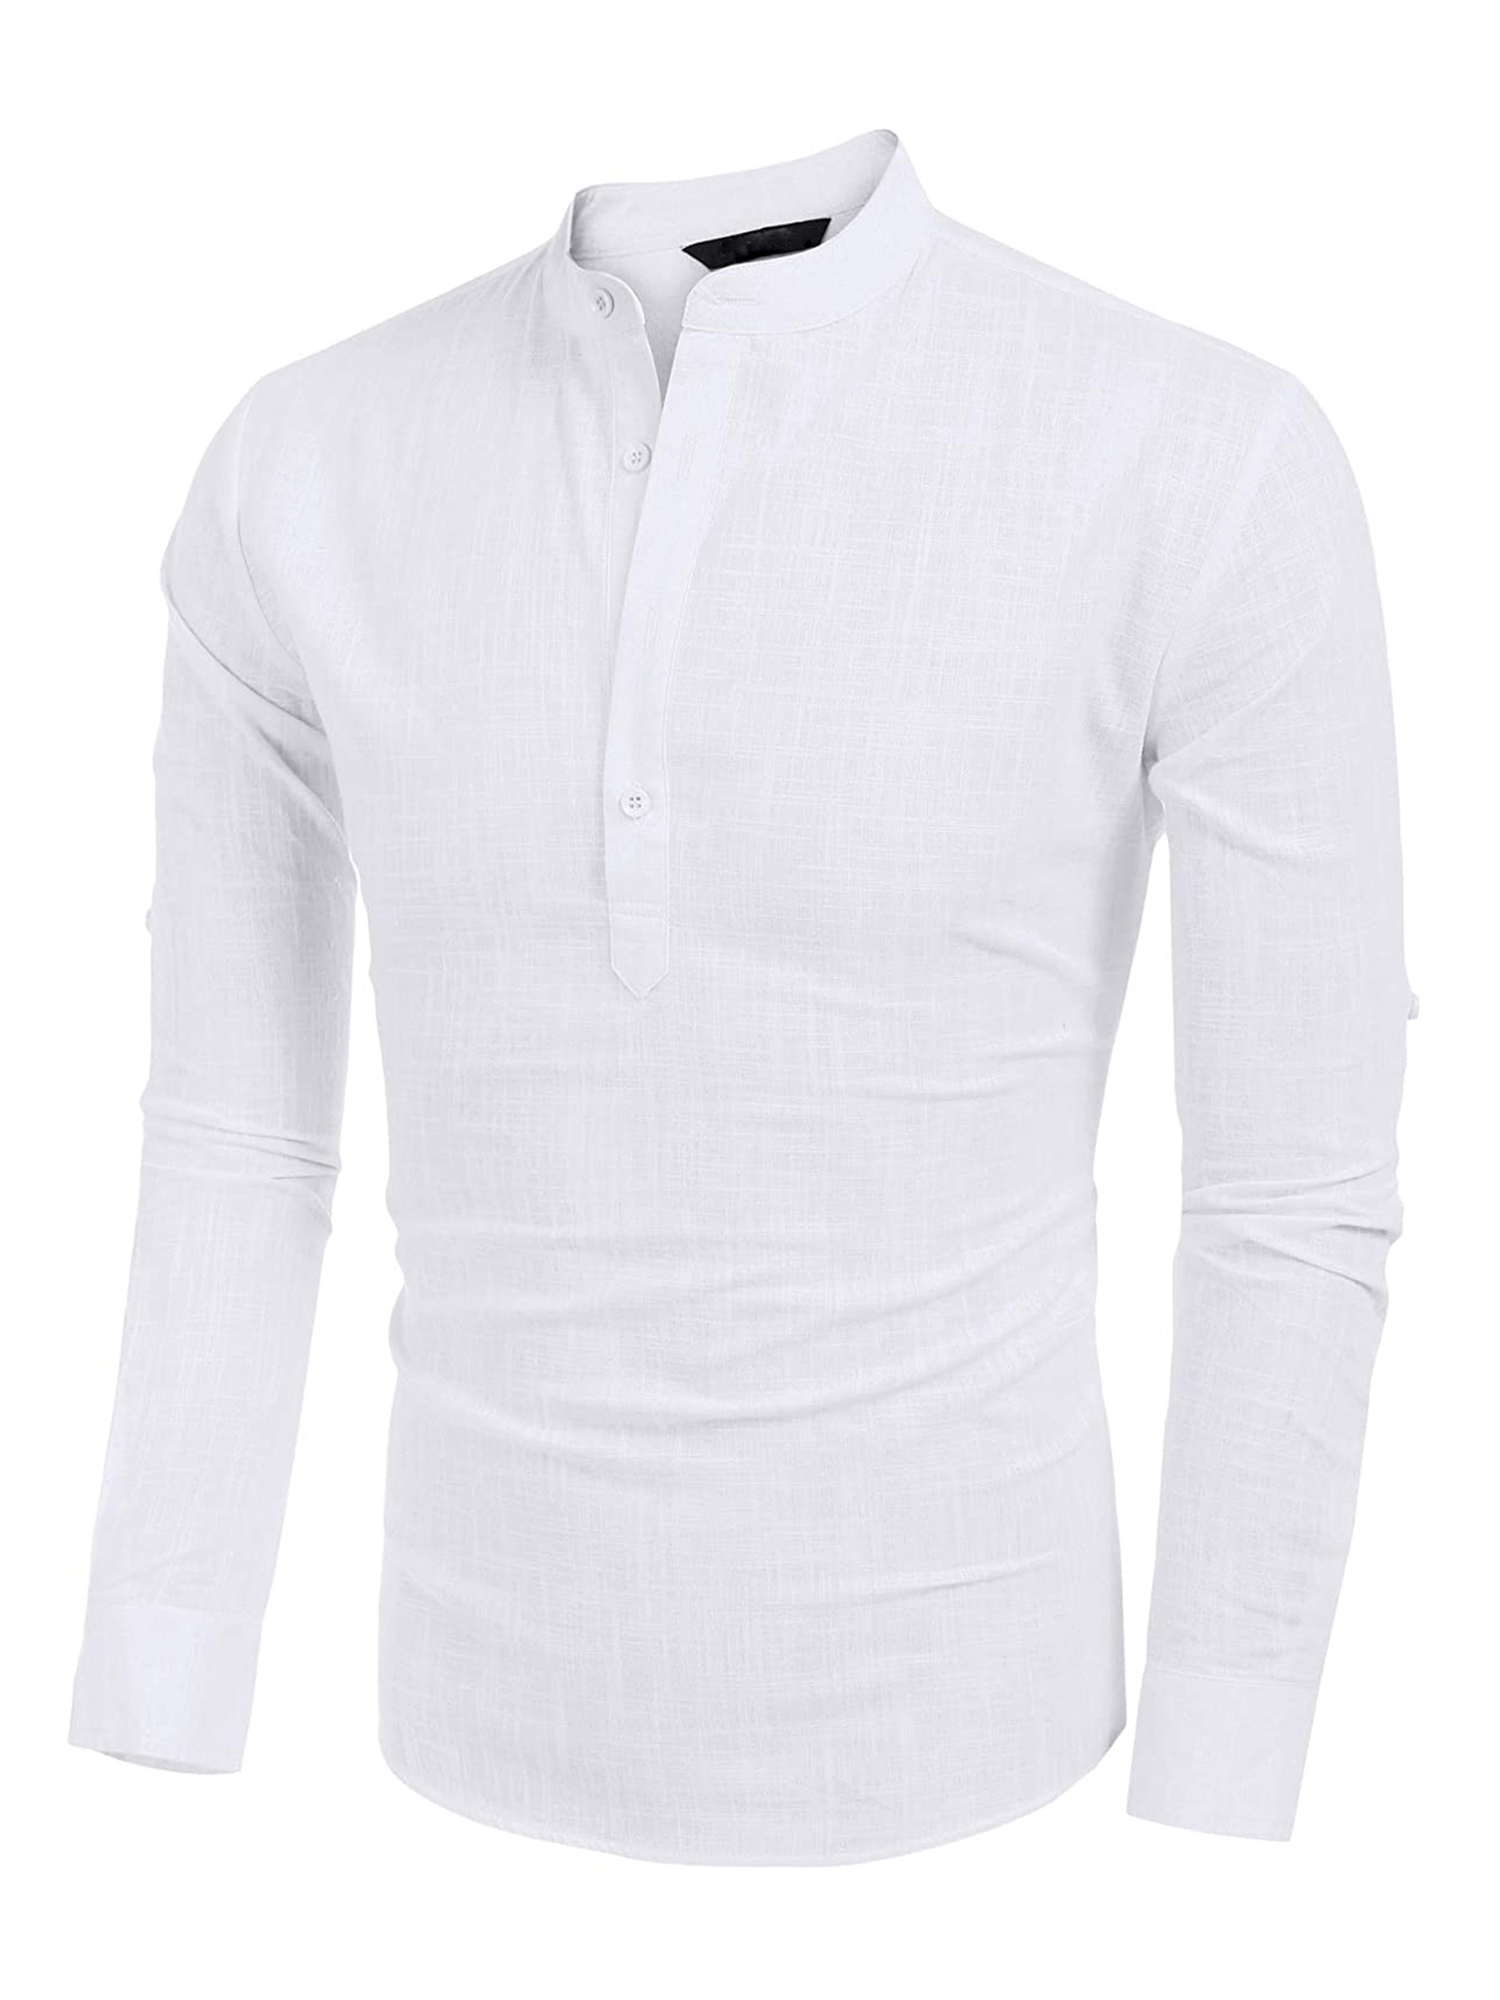 Gwiyeopda Men Cotton Linen Long Sleeve Stand Collar Shirts Casual Loose ...